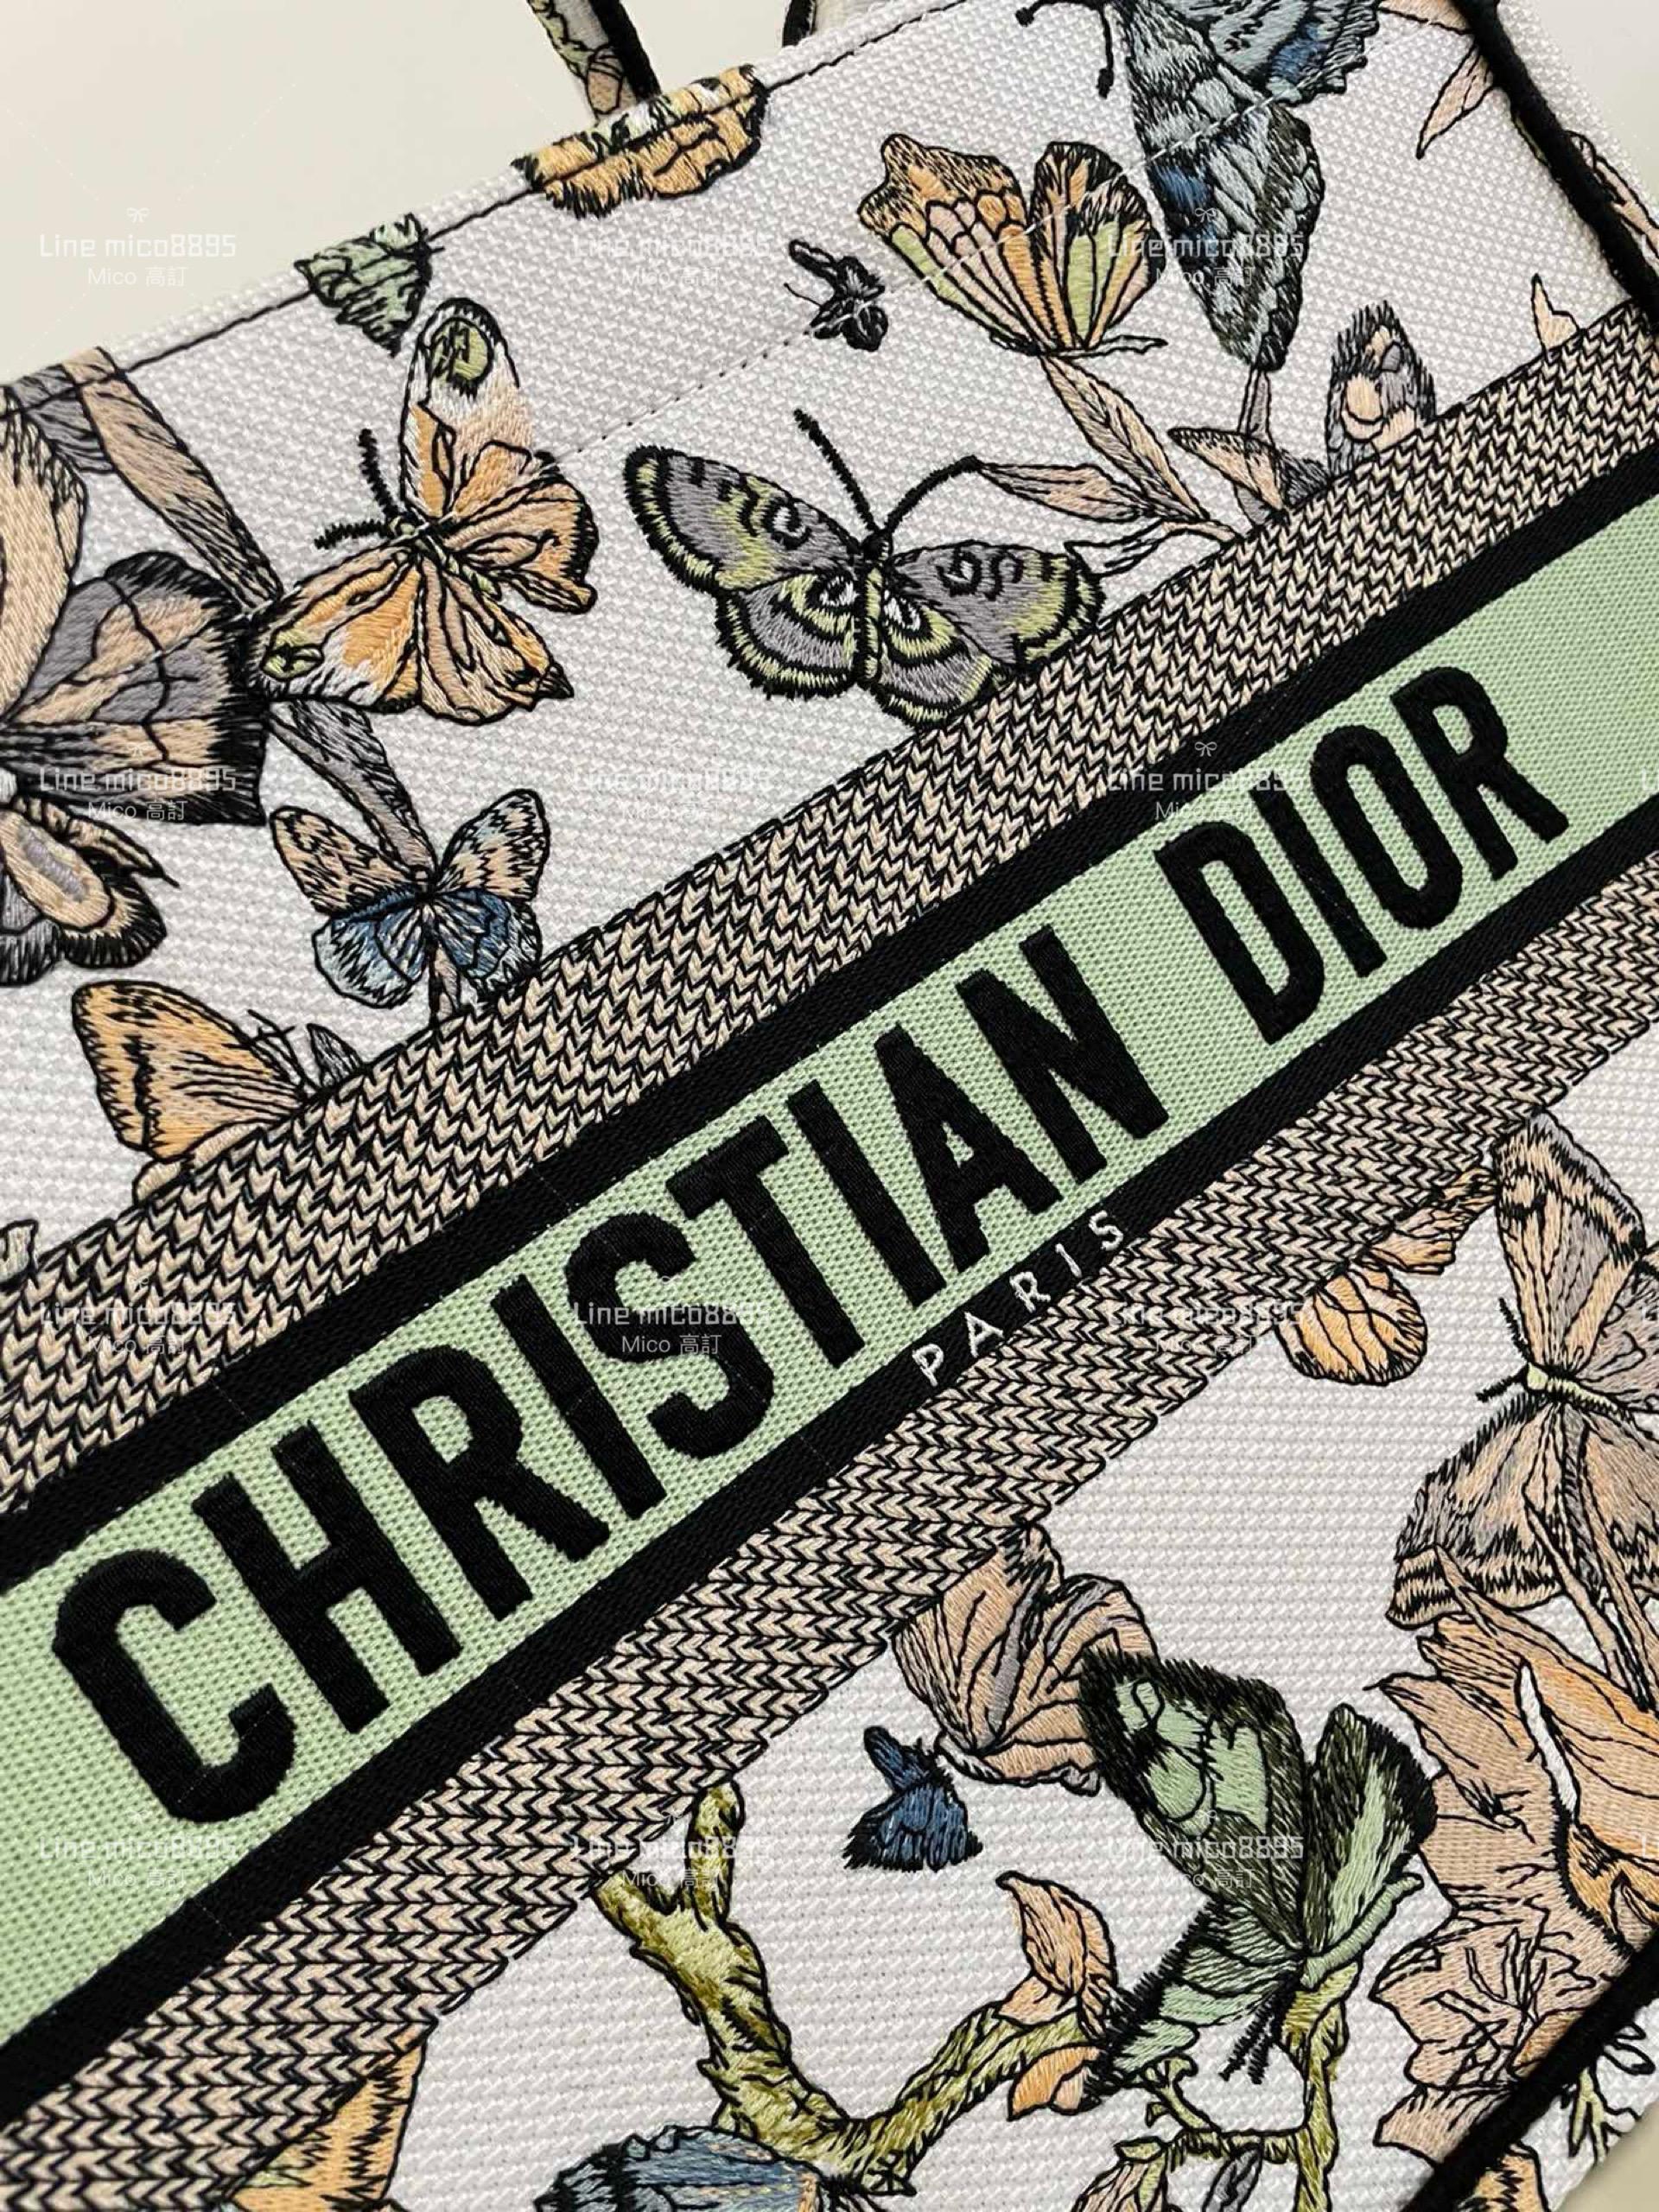 Dior 中號 綠色蝴蝶刺繡Tote手提包 最新秋冬系列 36cm